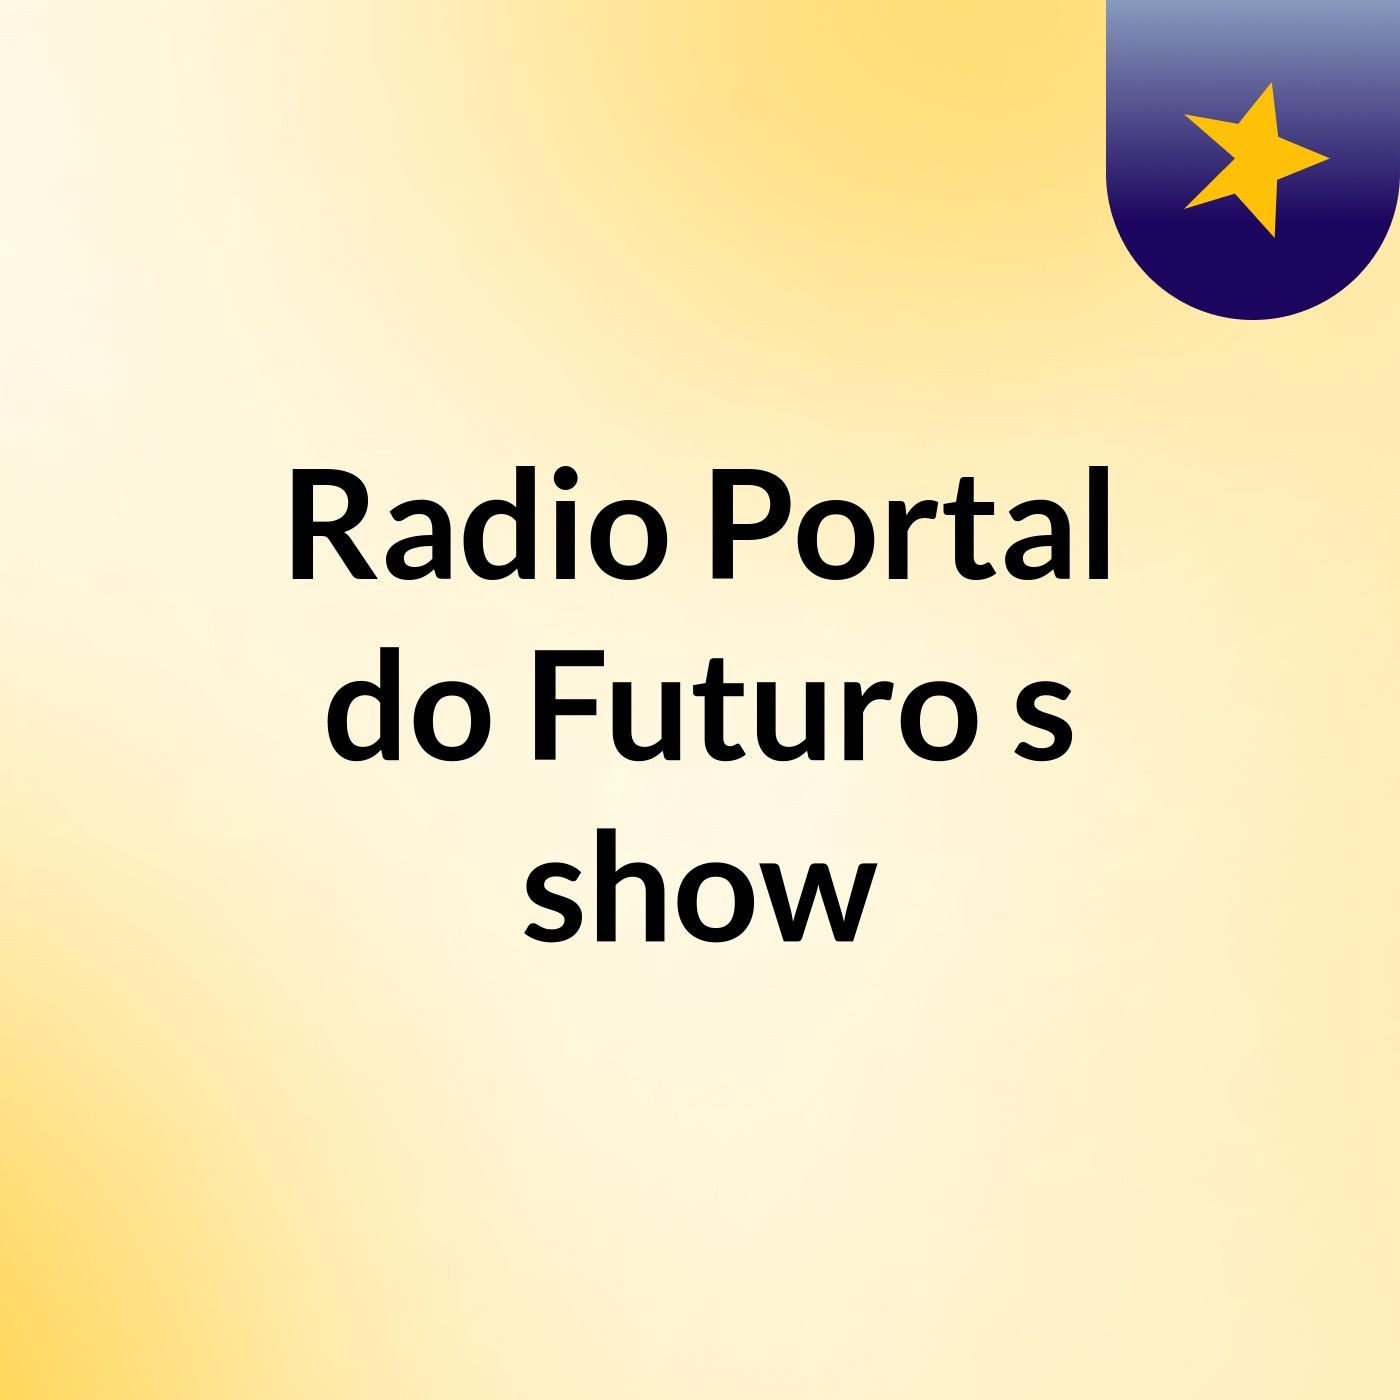 Radio Portal do Futuro's show